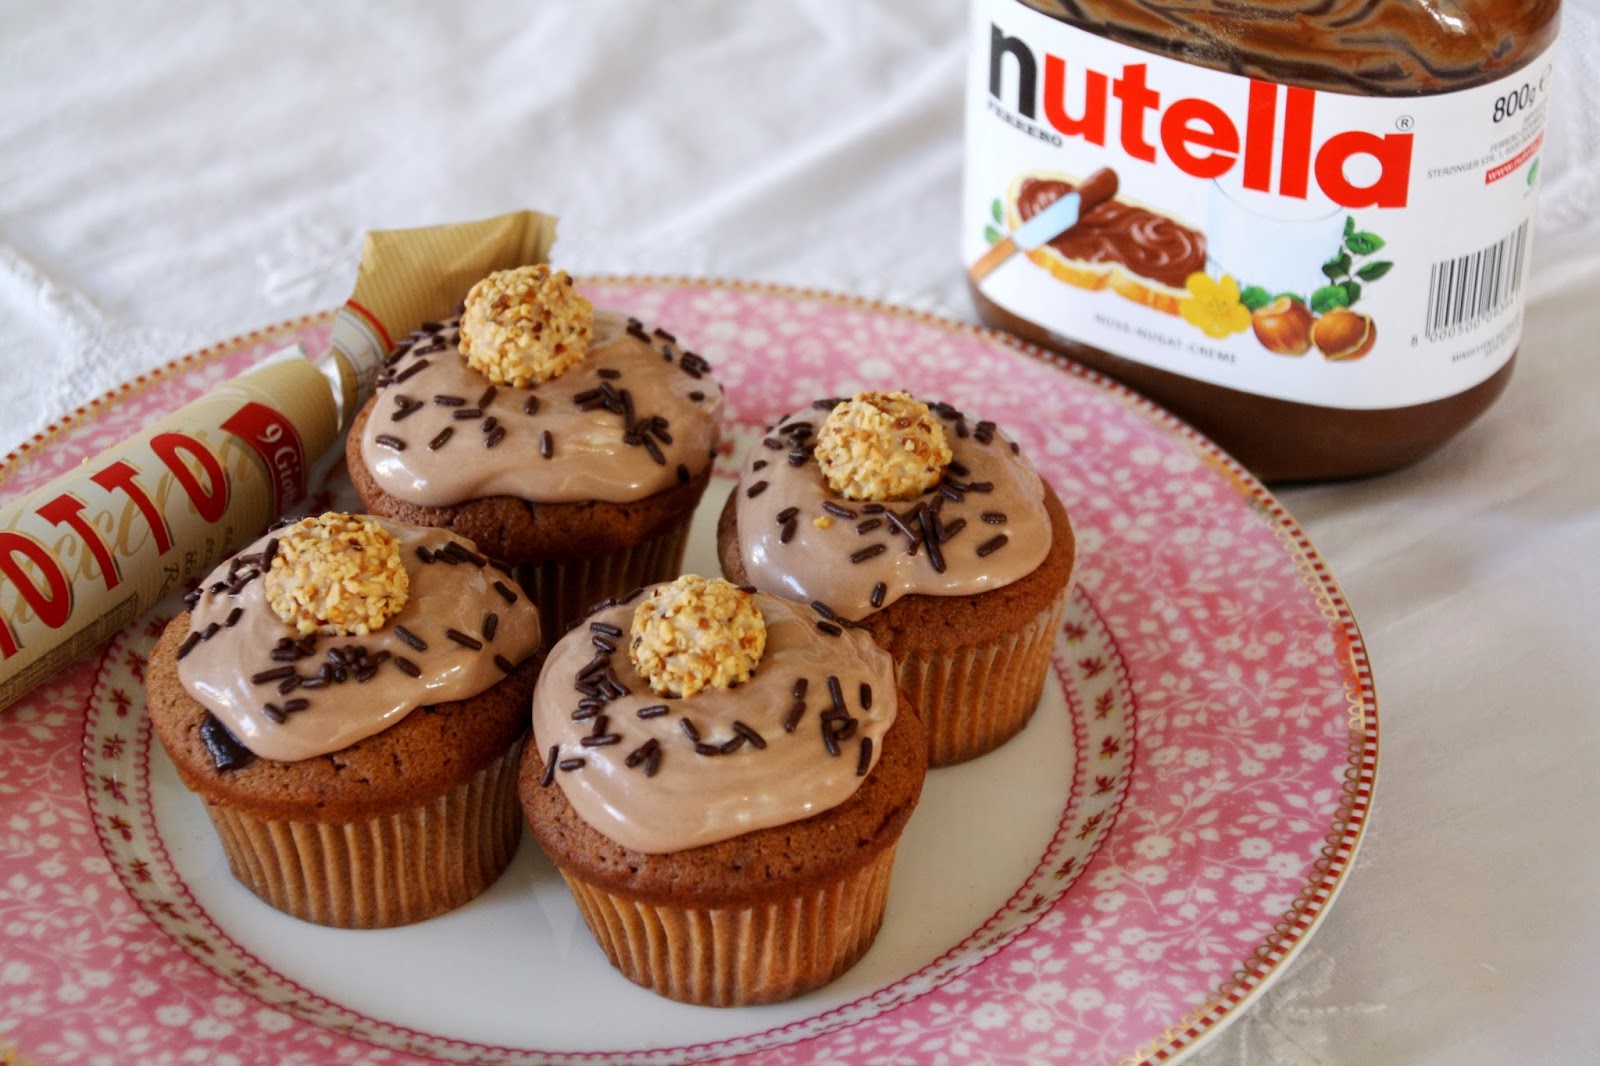 _Nutella-Giotto-Cupcakes | creative bakery